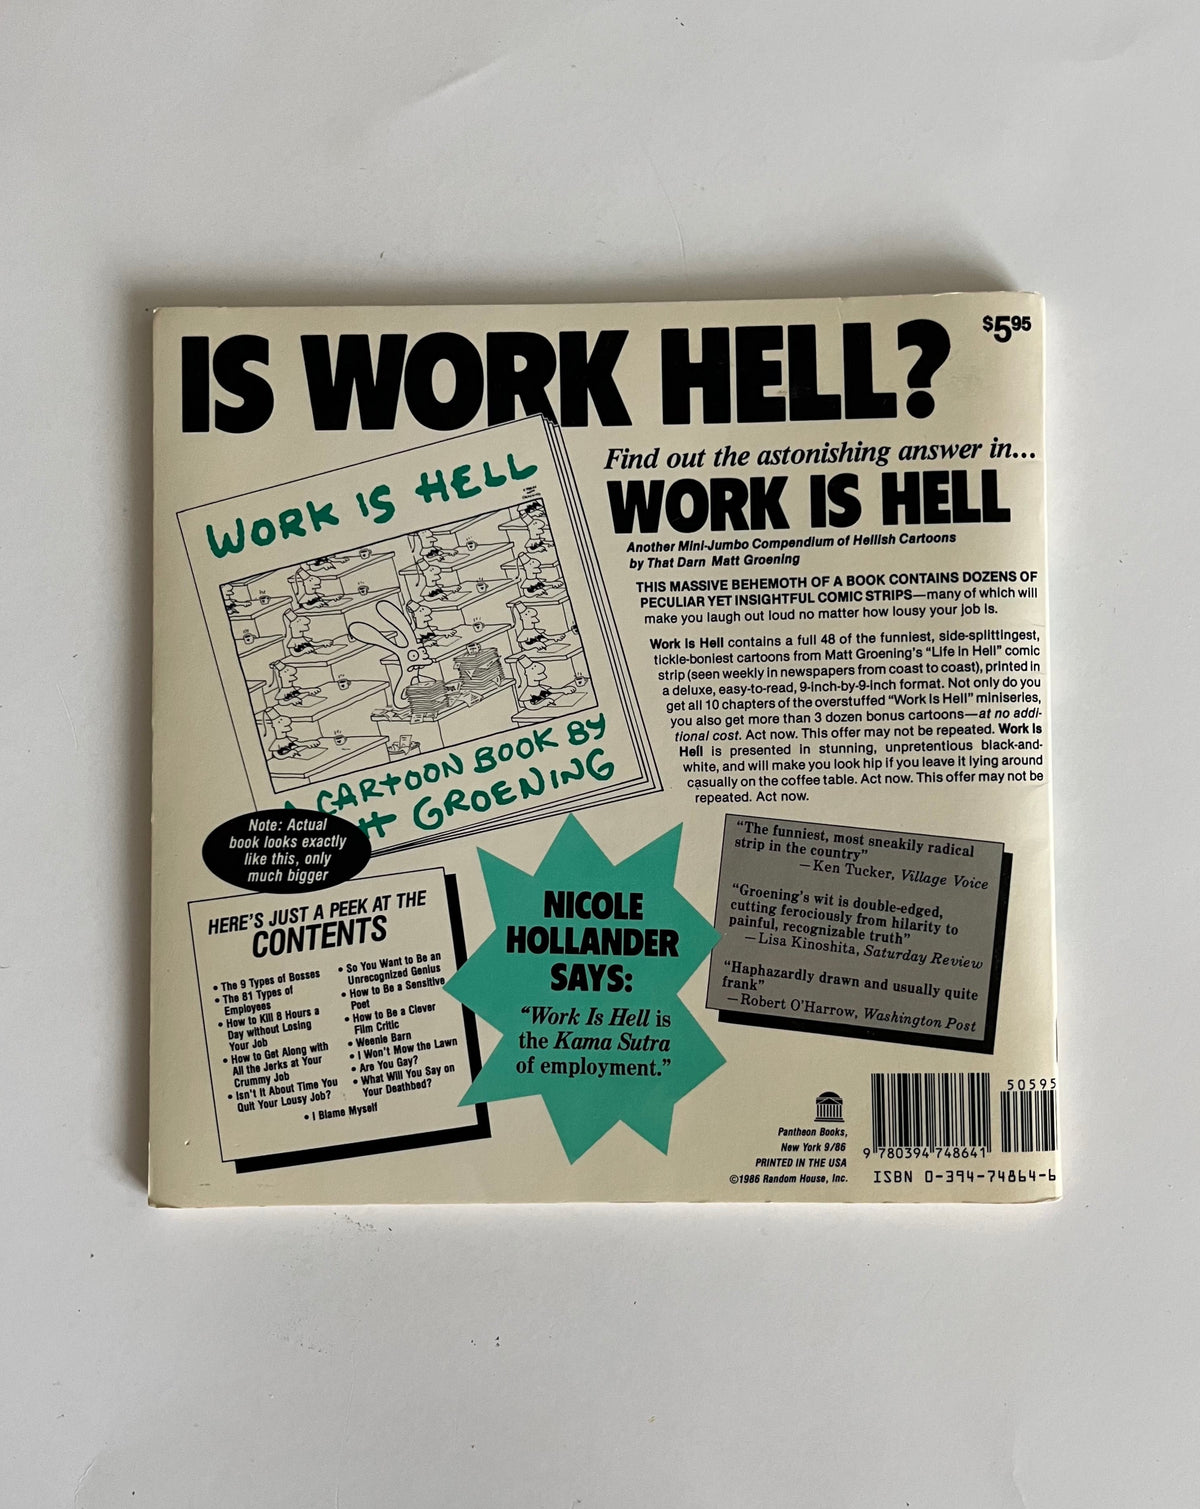 Work is Hell by Matt Groening